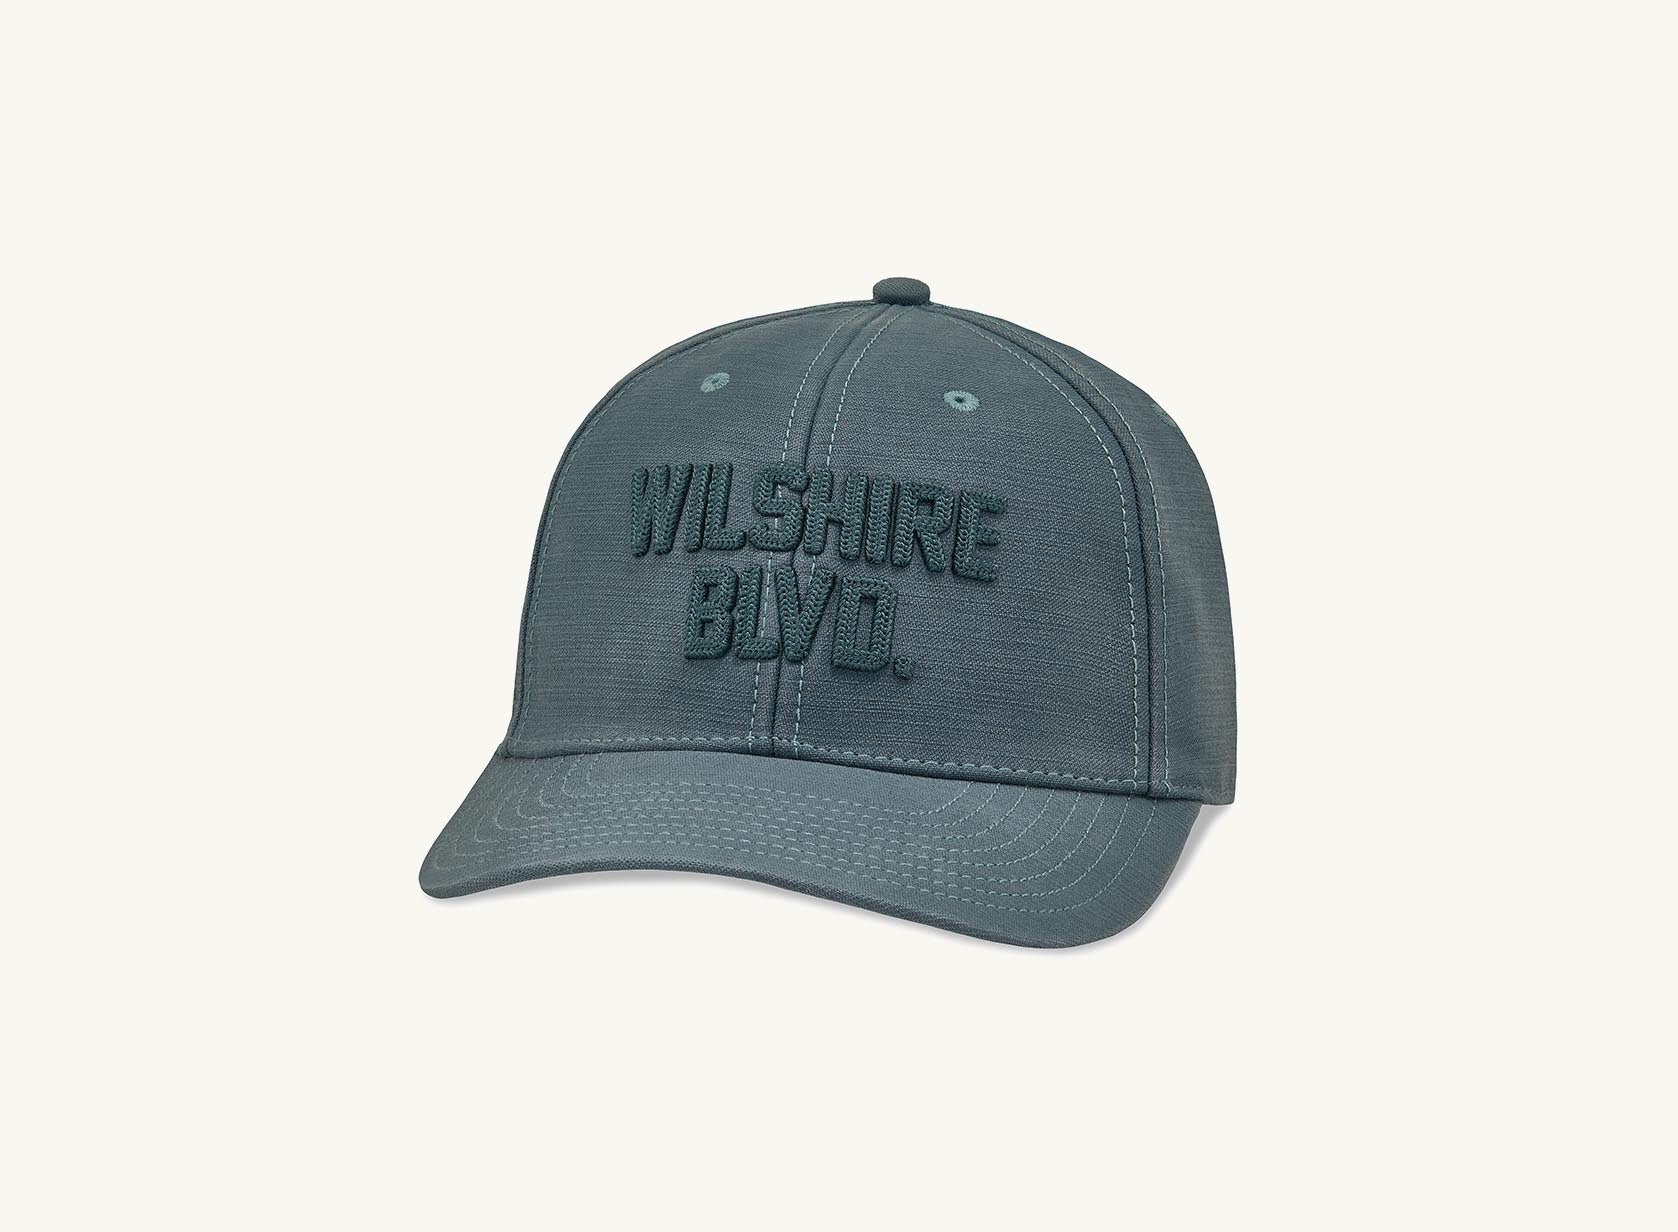 green wilshire blvd hat